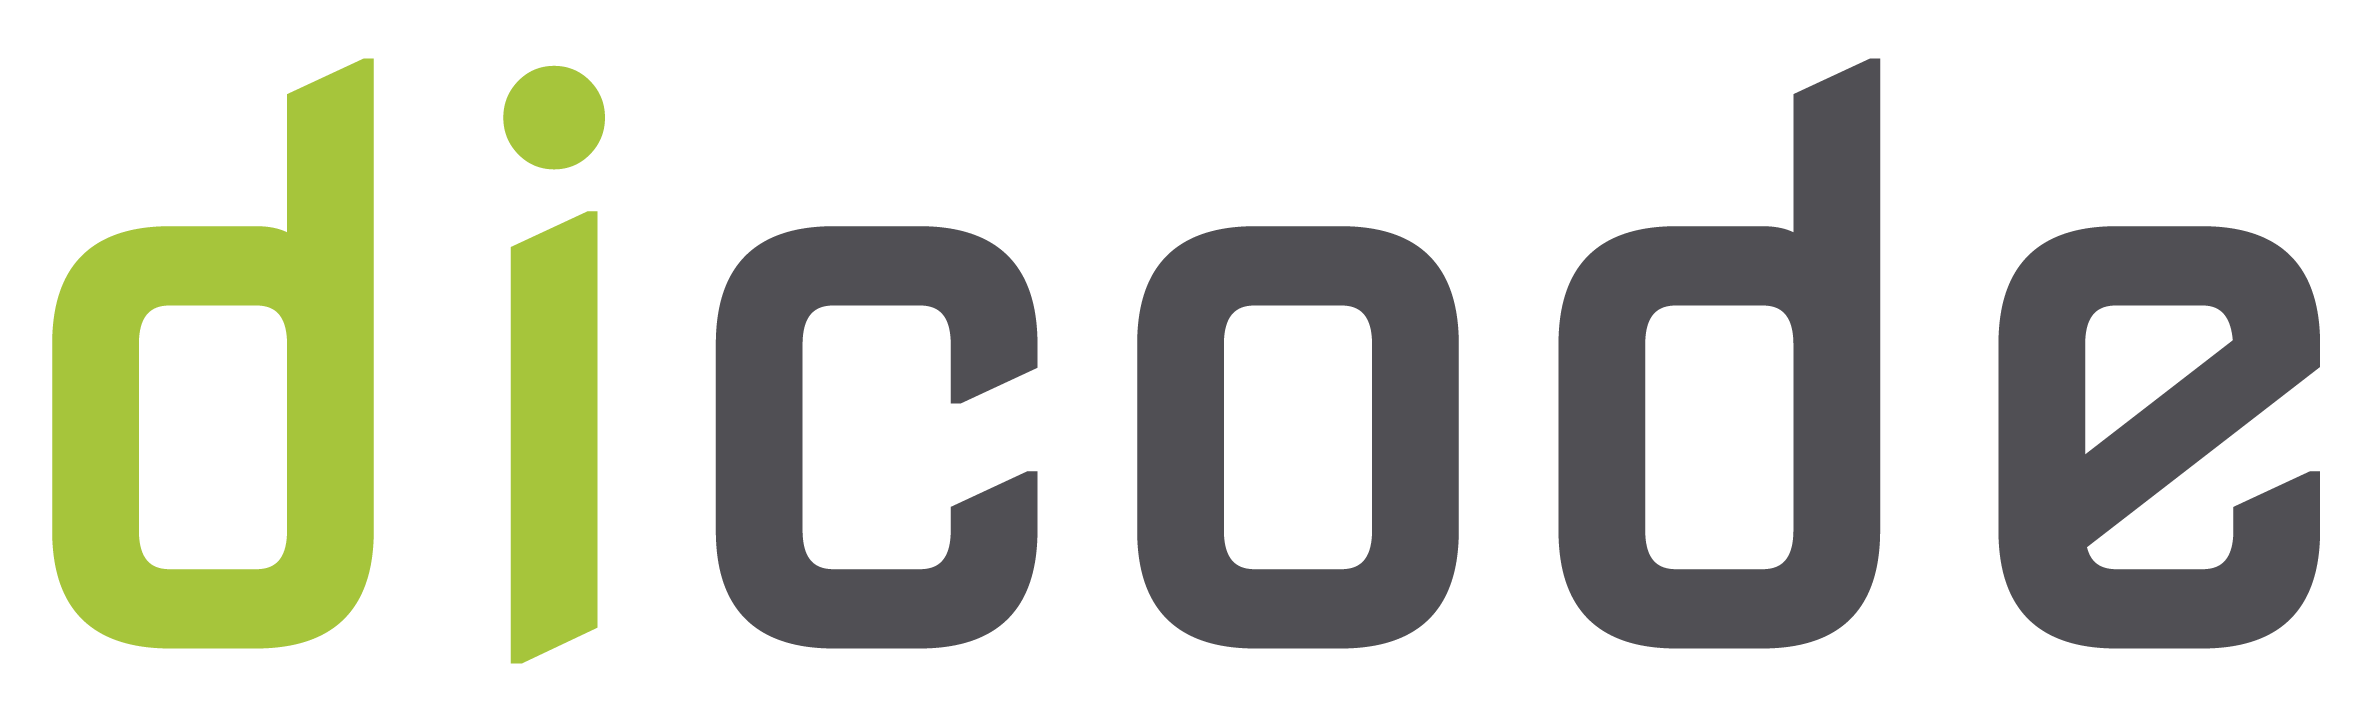 Dicode-logo